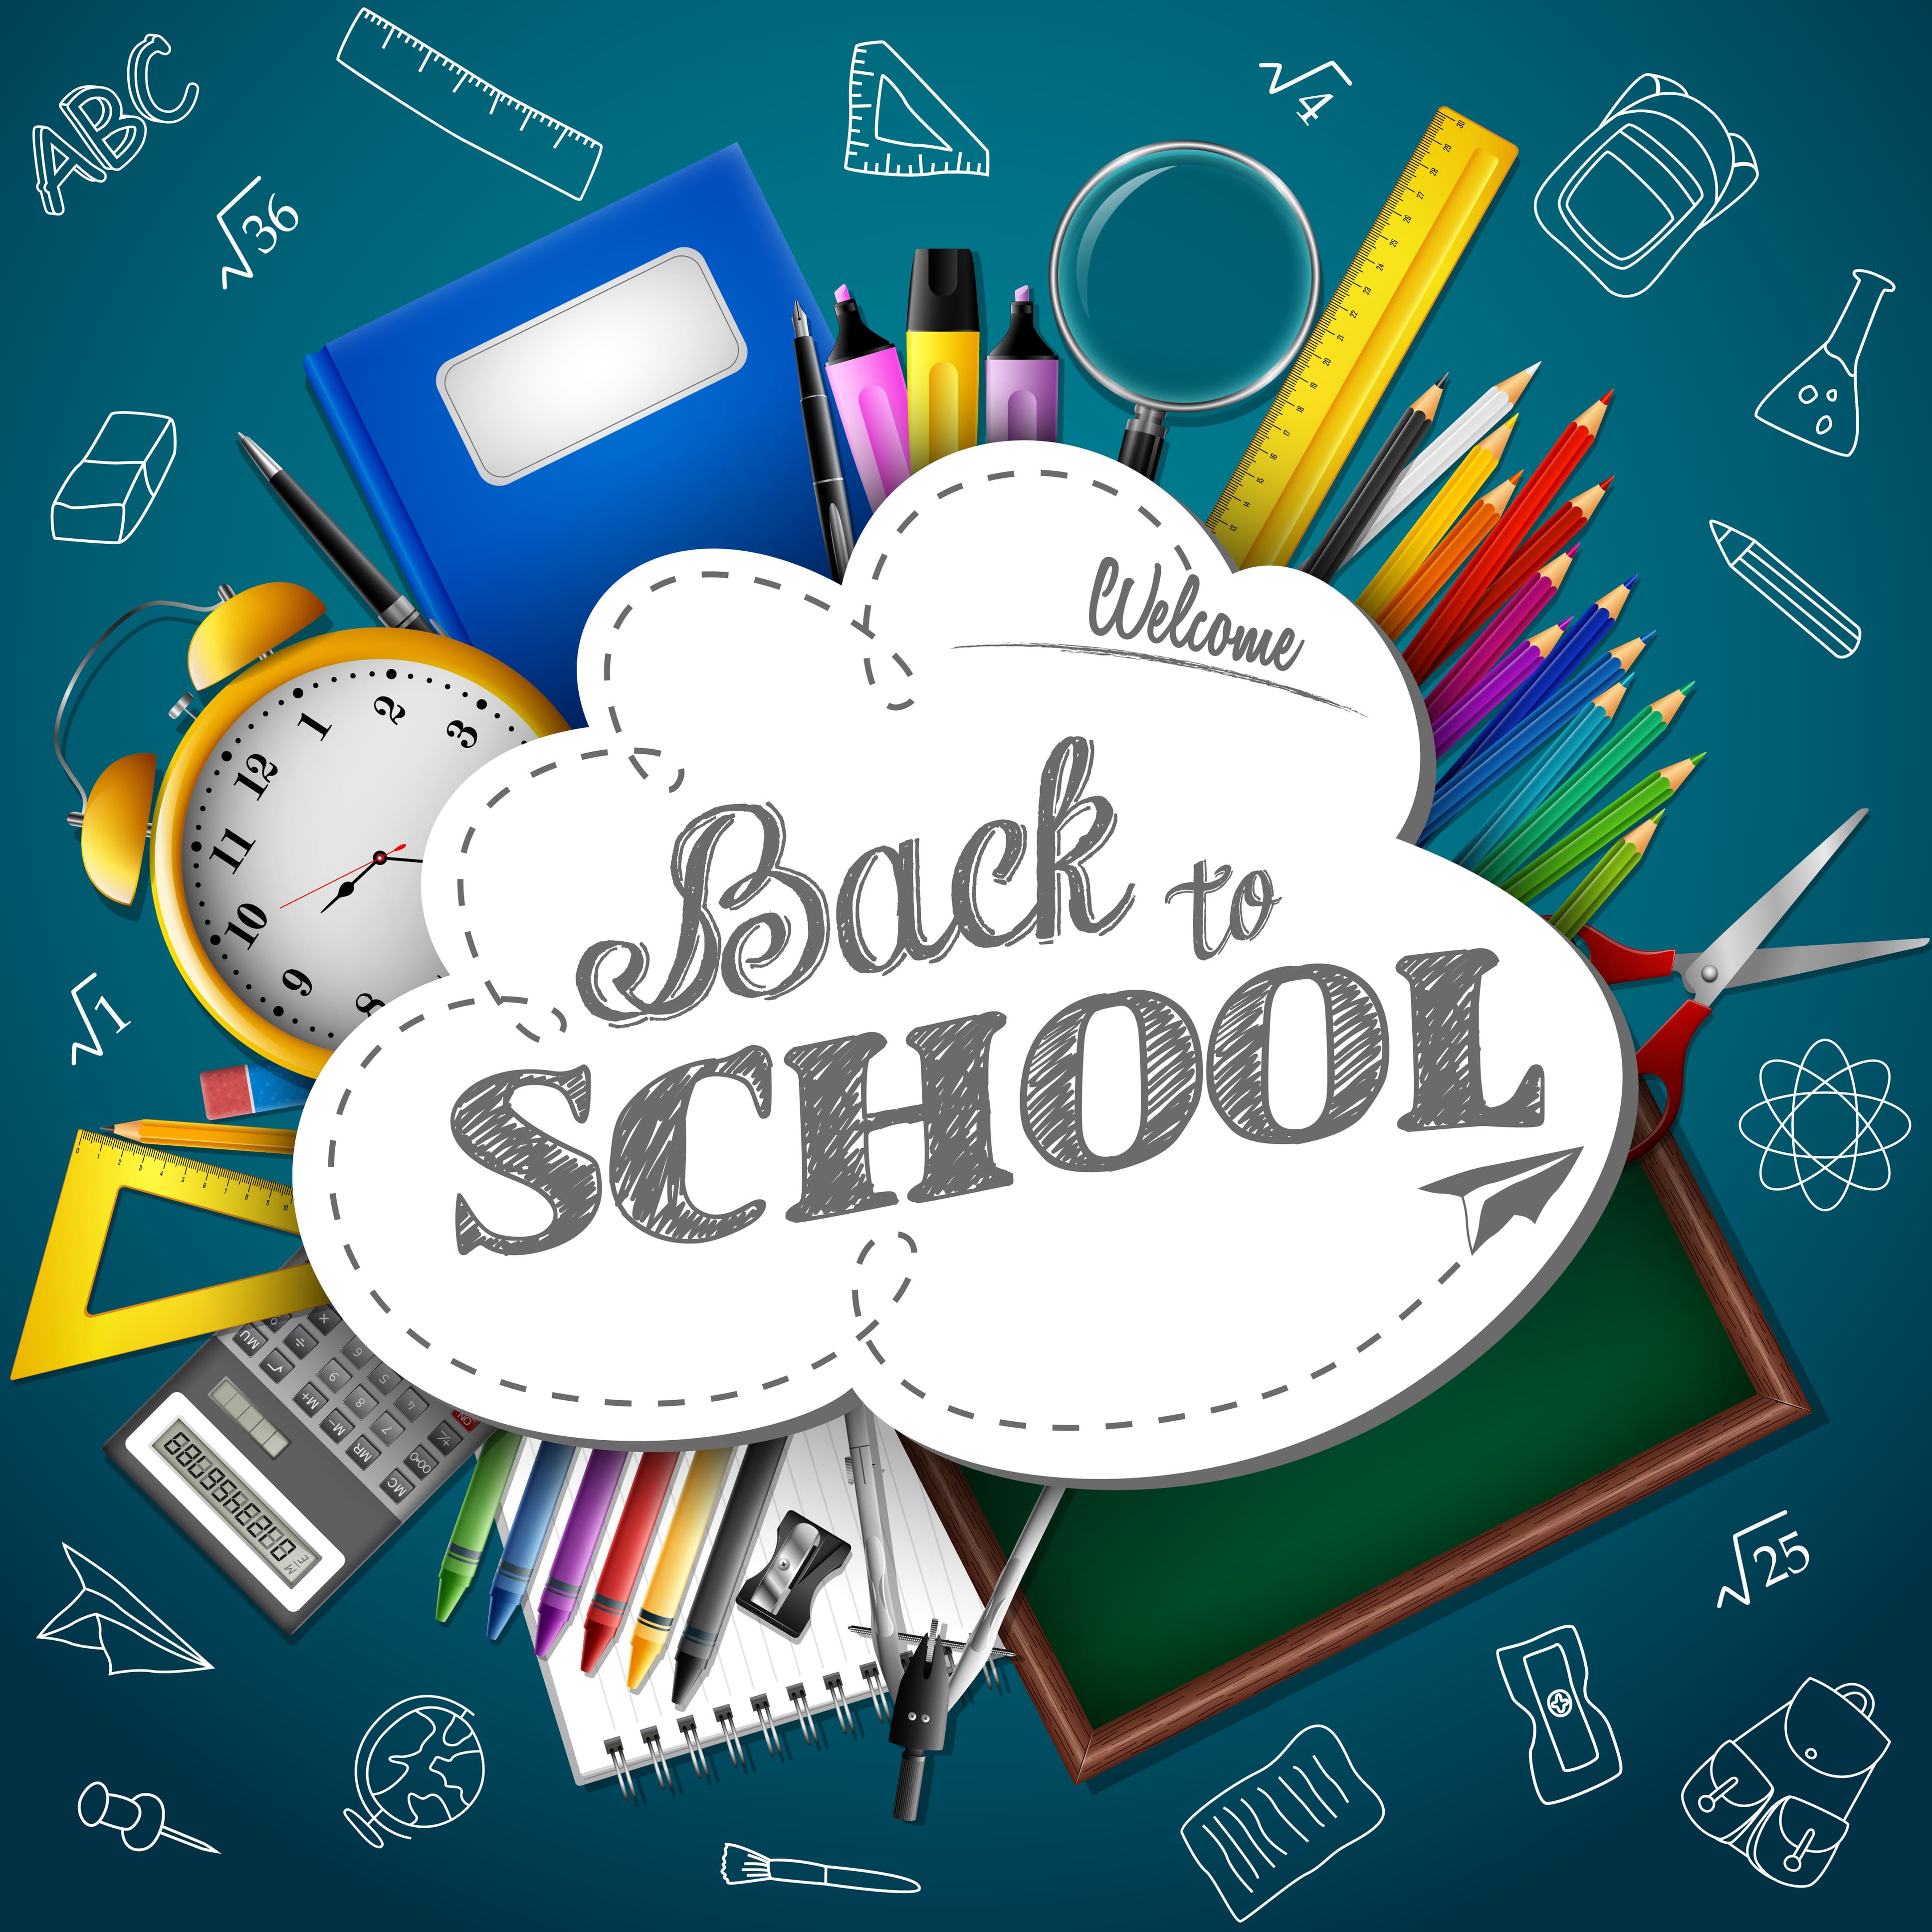 "Back to school": Schulbeginn Material im Schulranzen